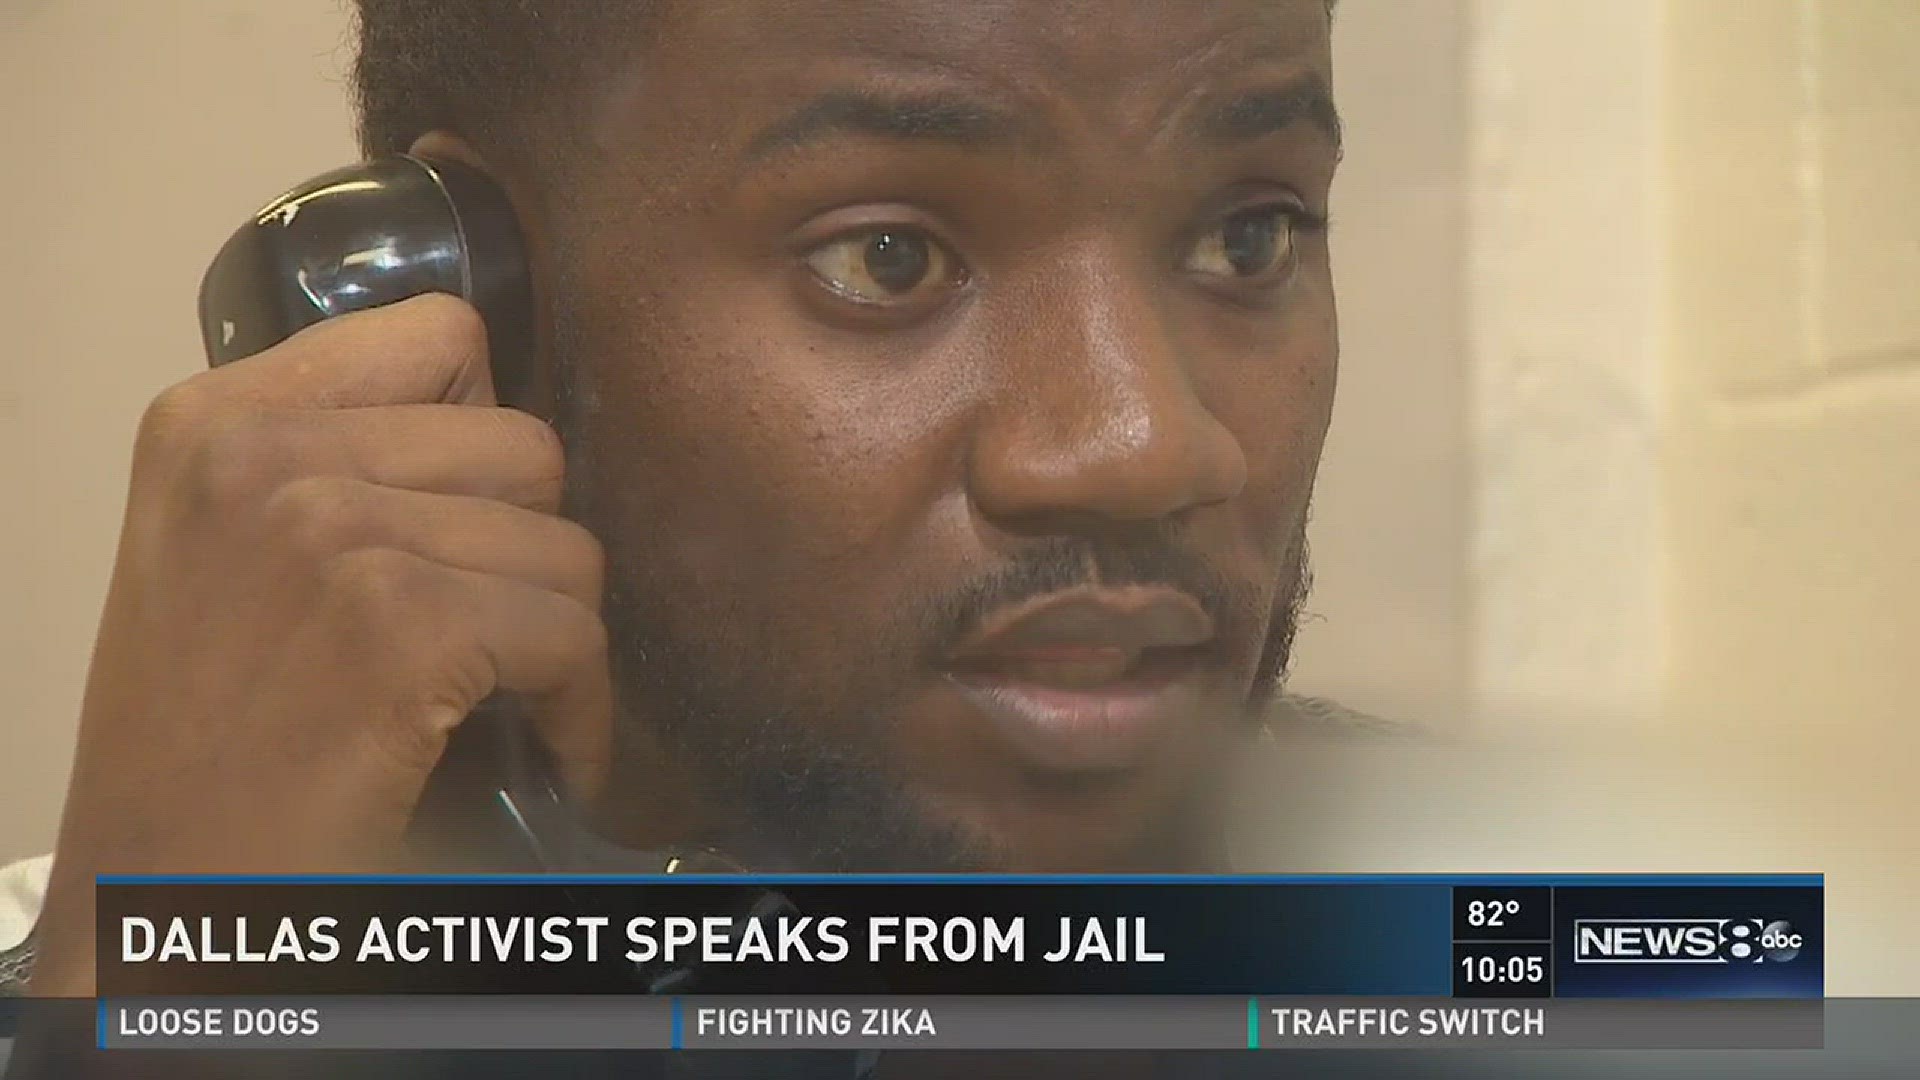 Dallas activist speaks from jail